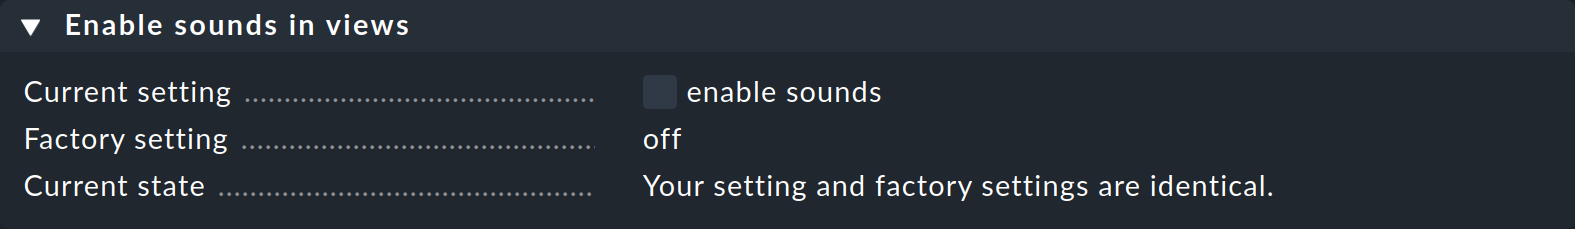 global settings enable sound